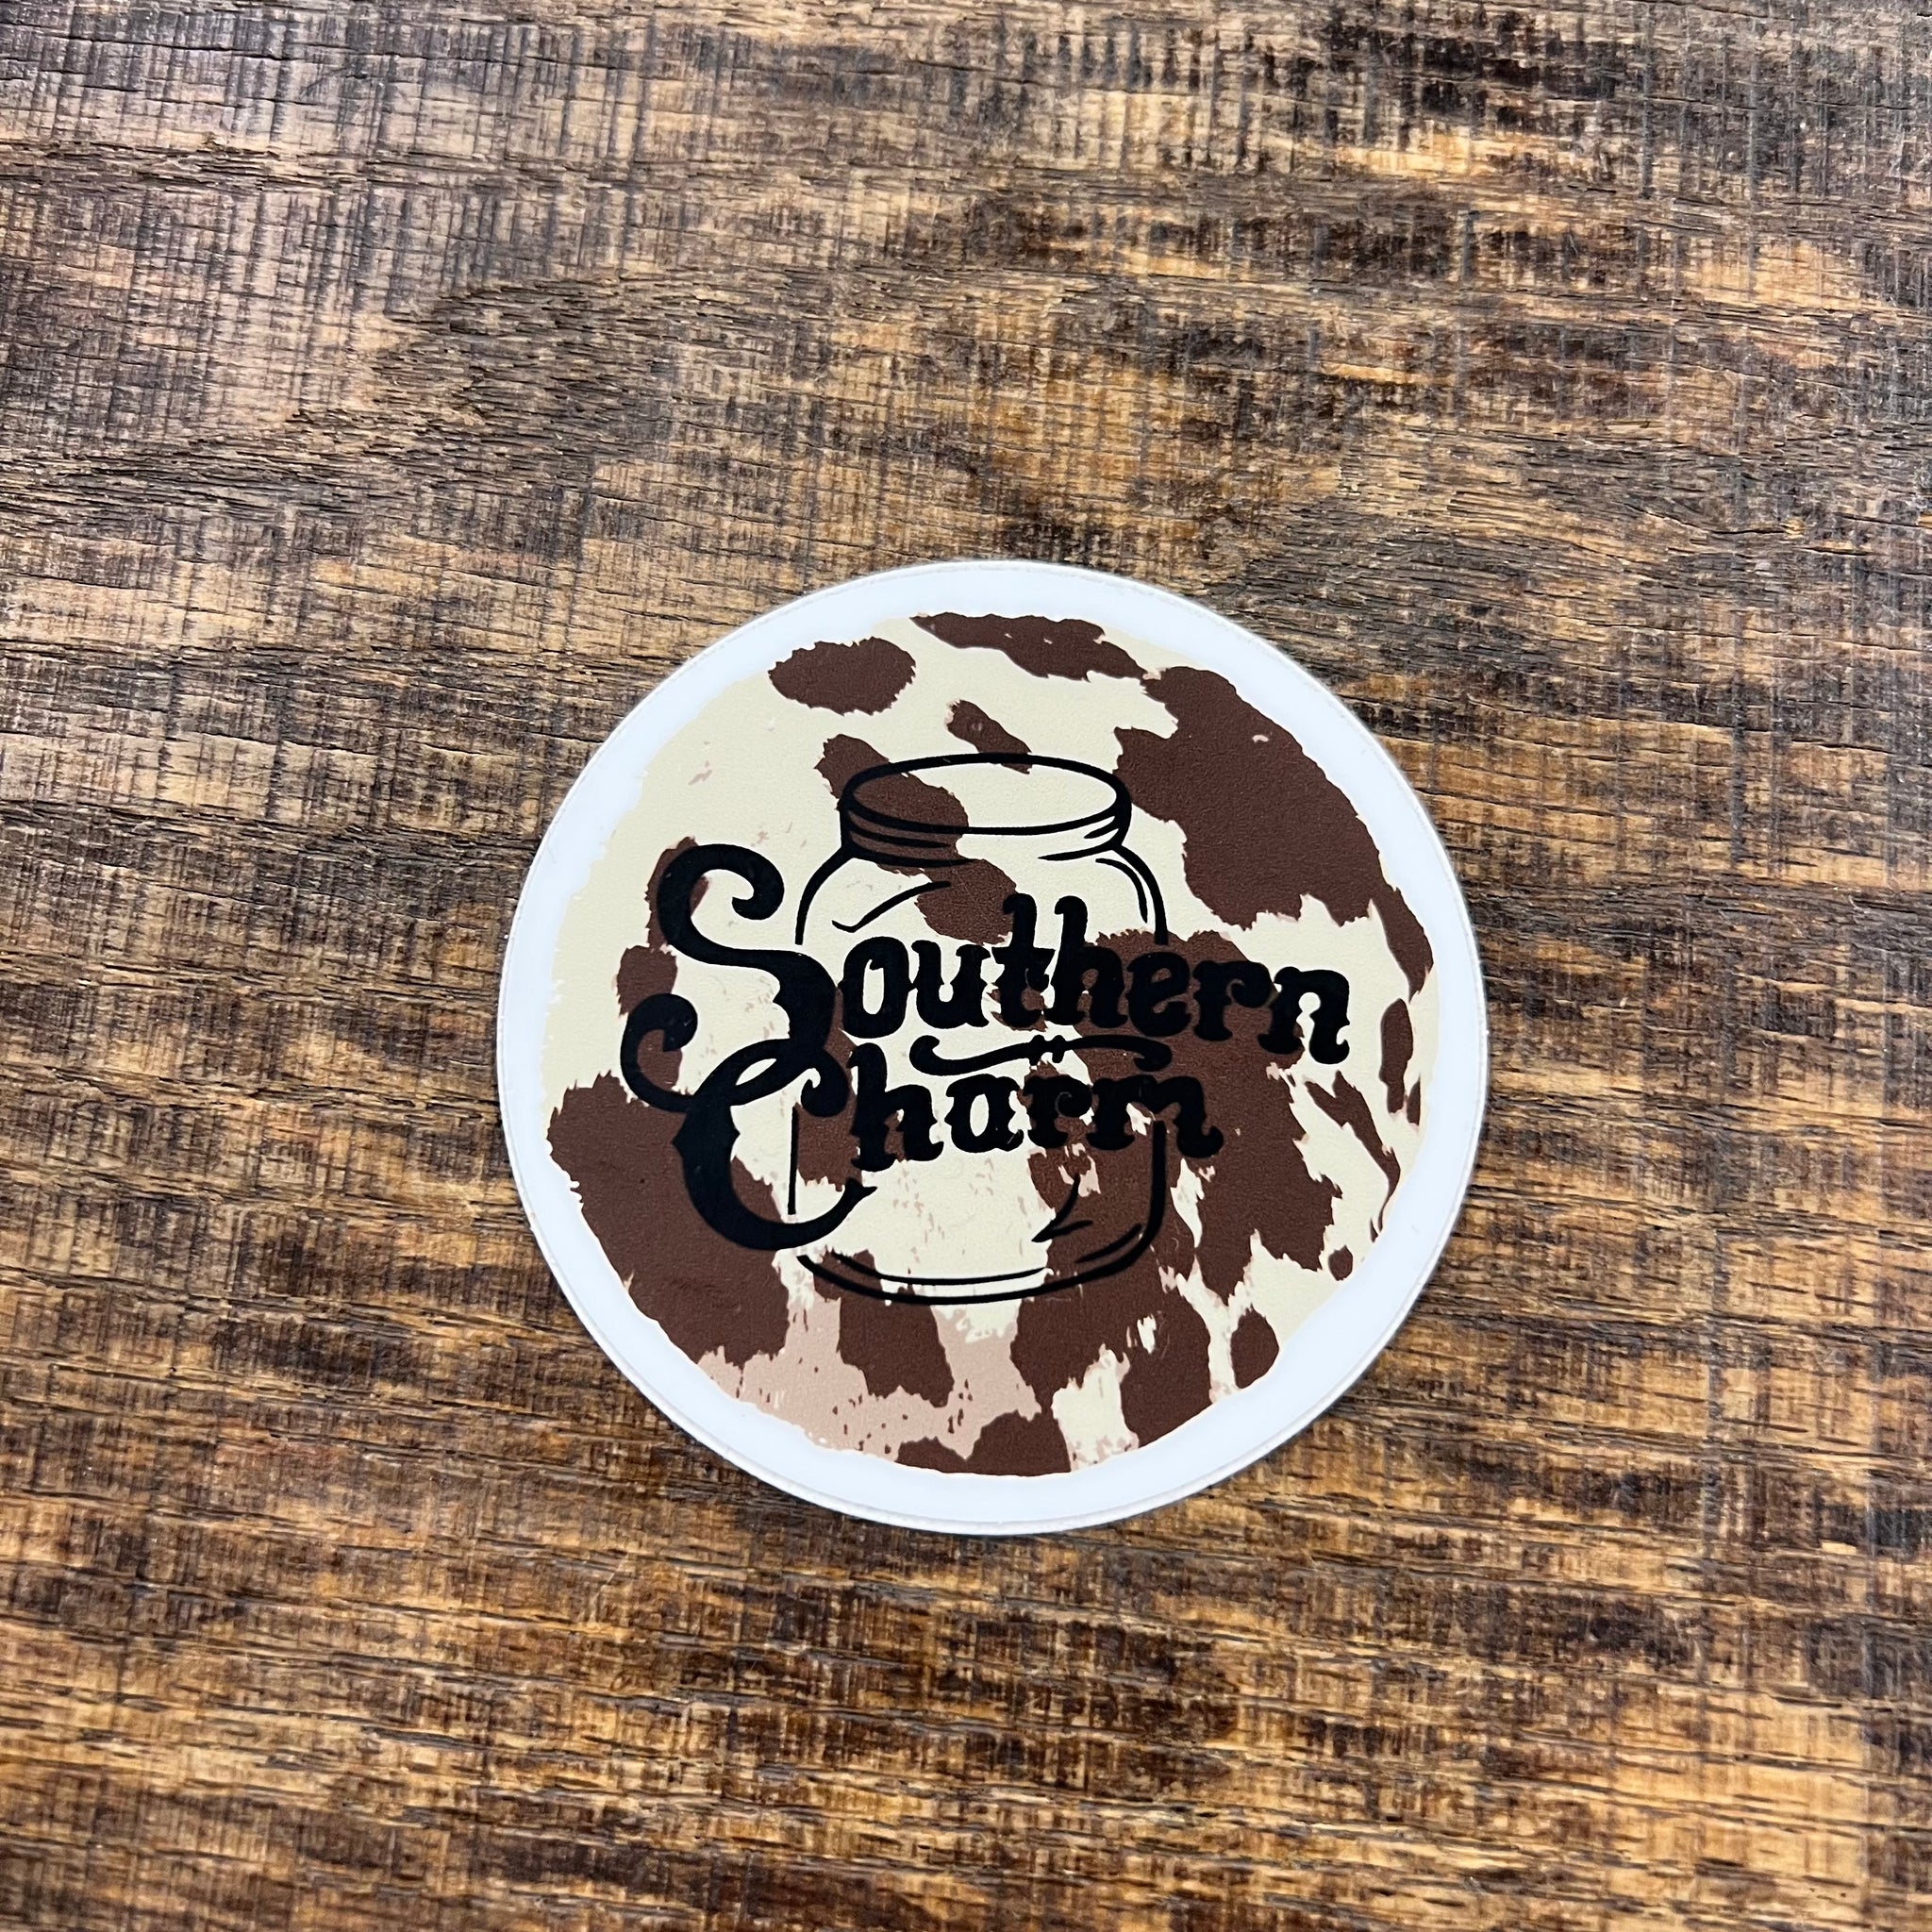 Southern Charm "Original" Sticker - Cowprint